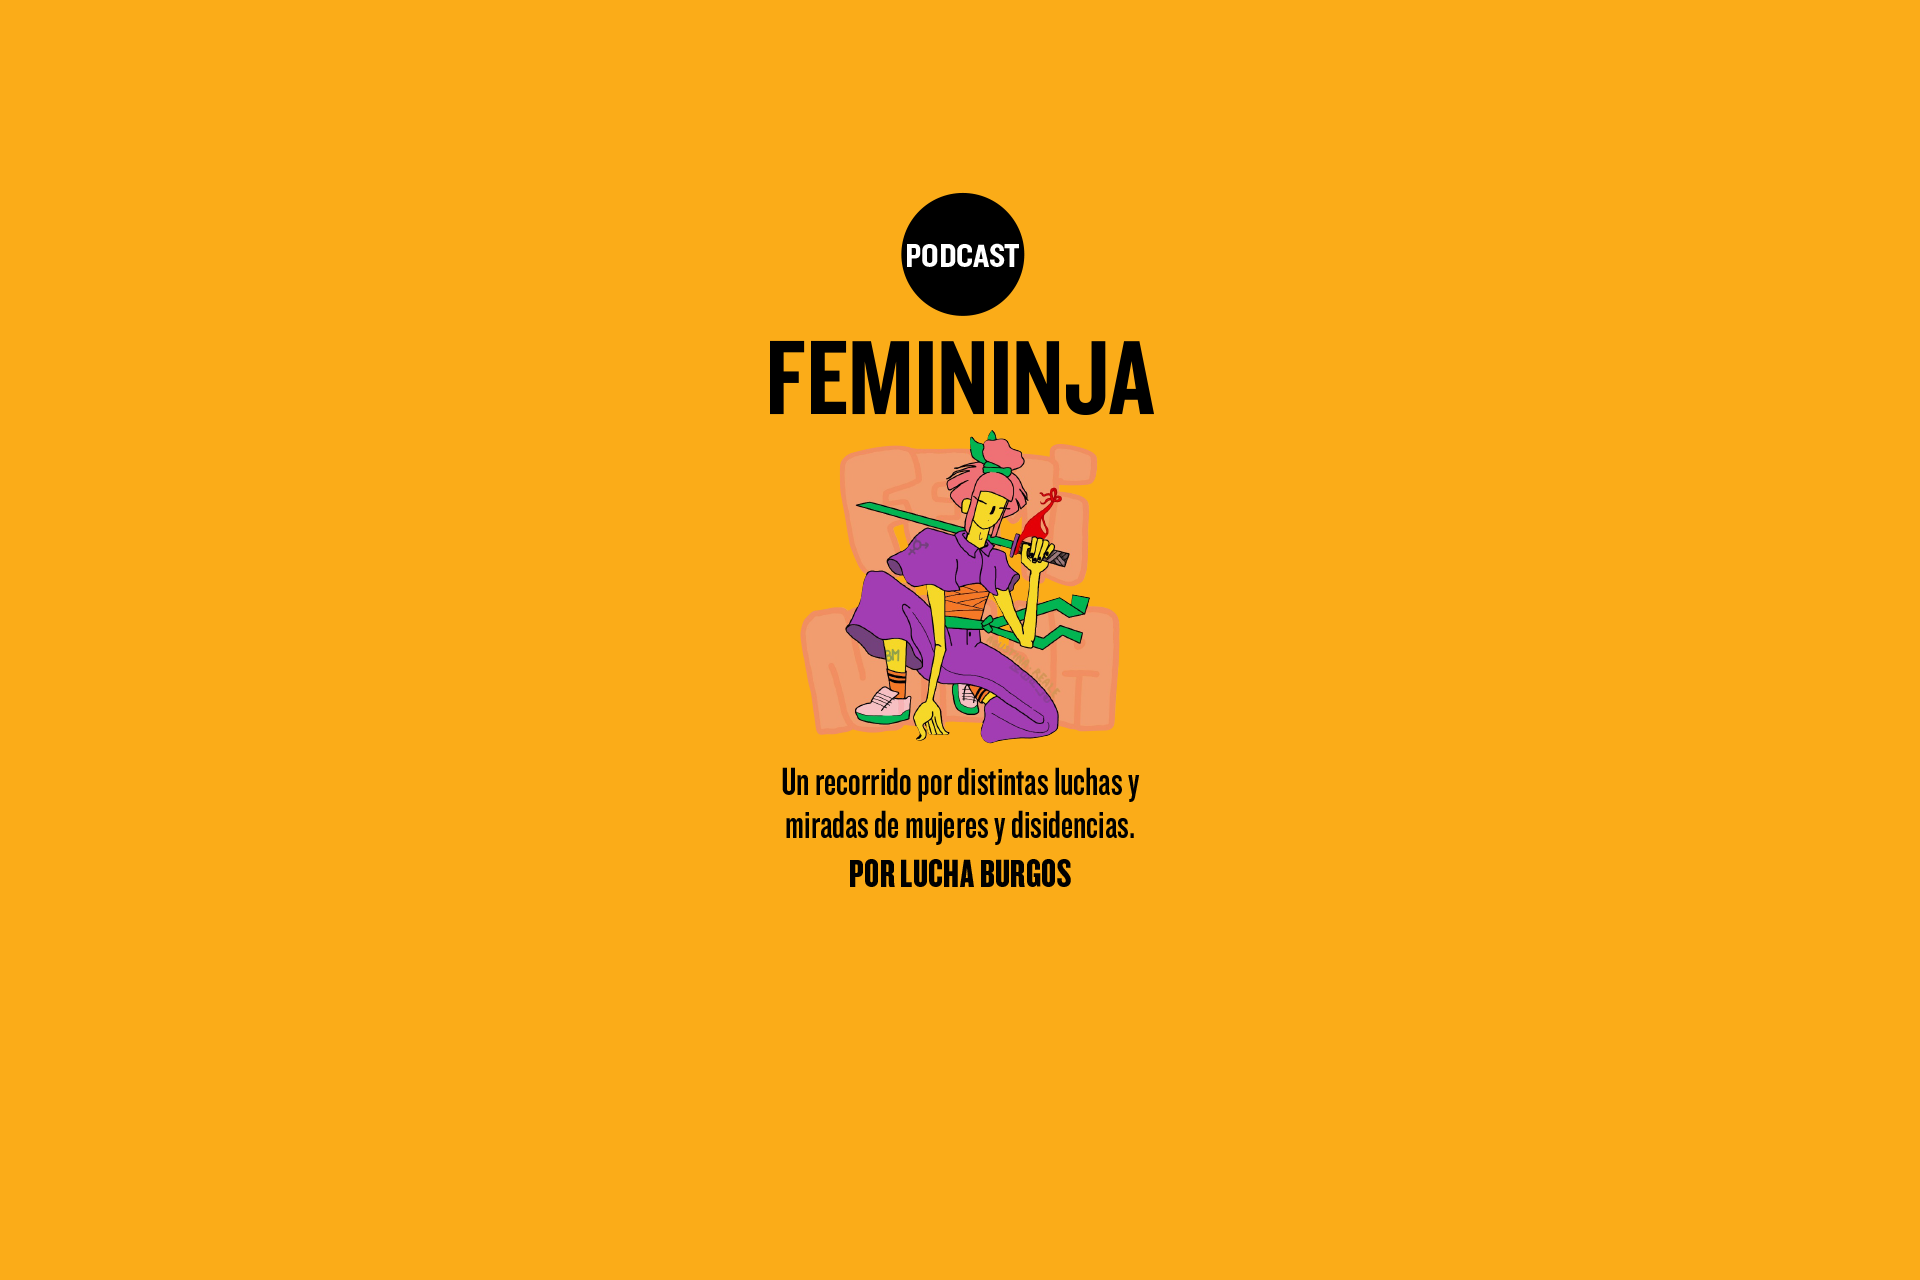 PODCAST: FEMININJA